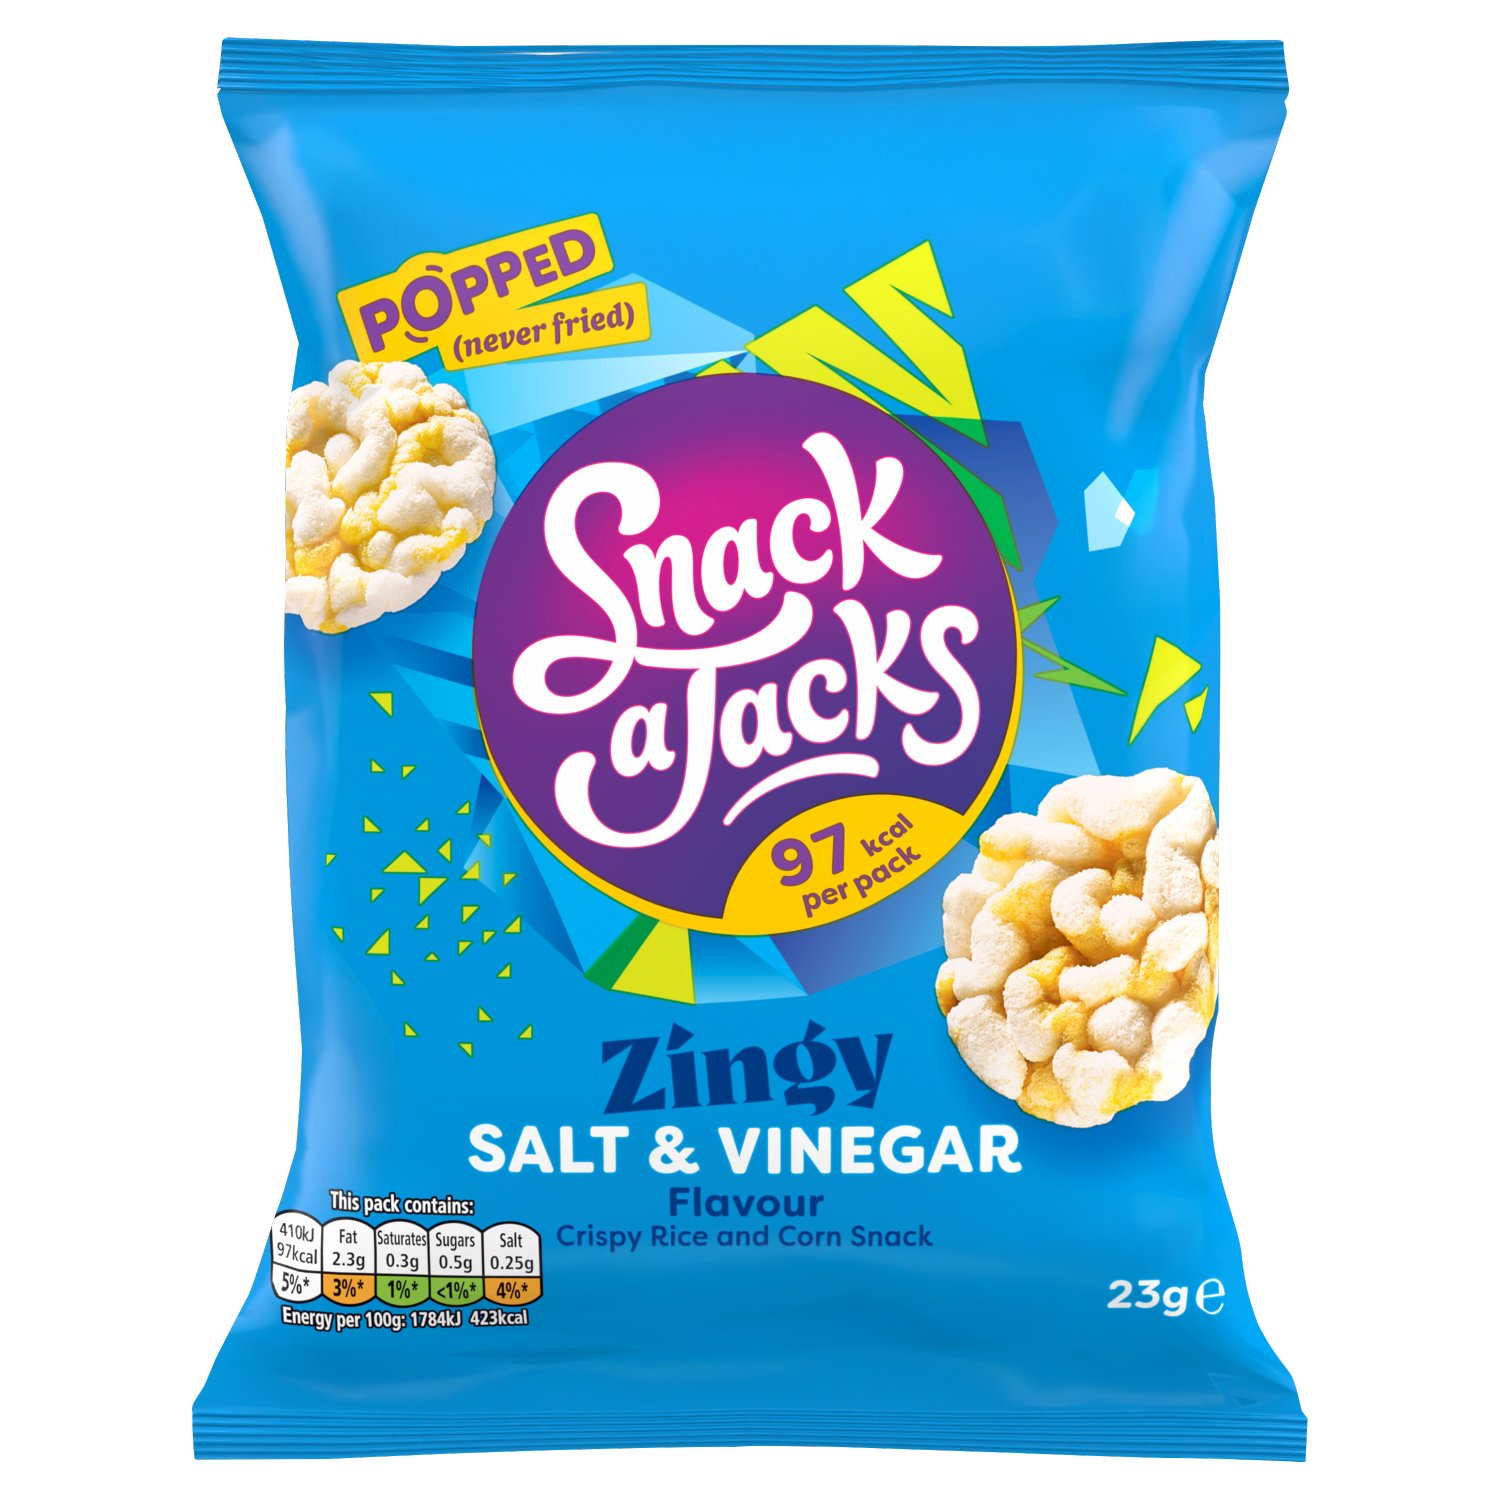 Snack A Jacks Zingy Salt & Vinegar Crispy Rice and Corn Snack (23 g)